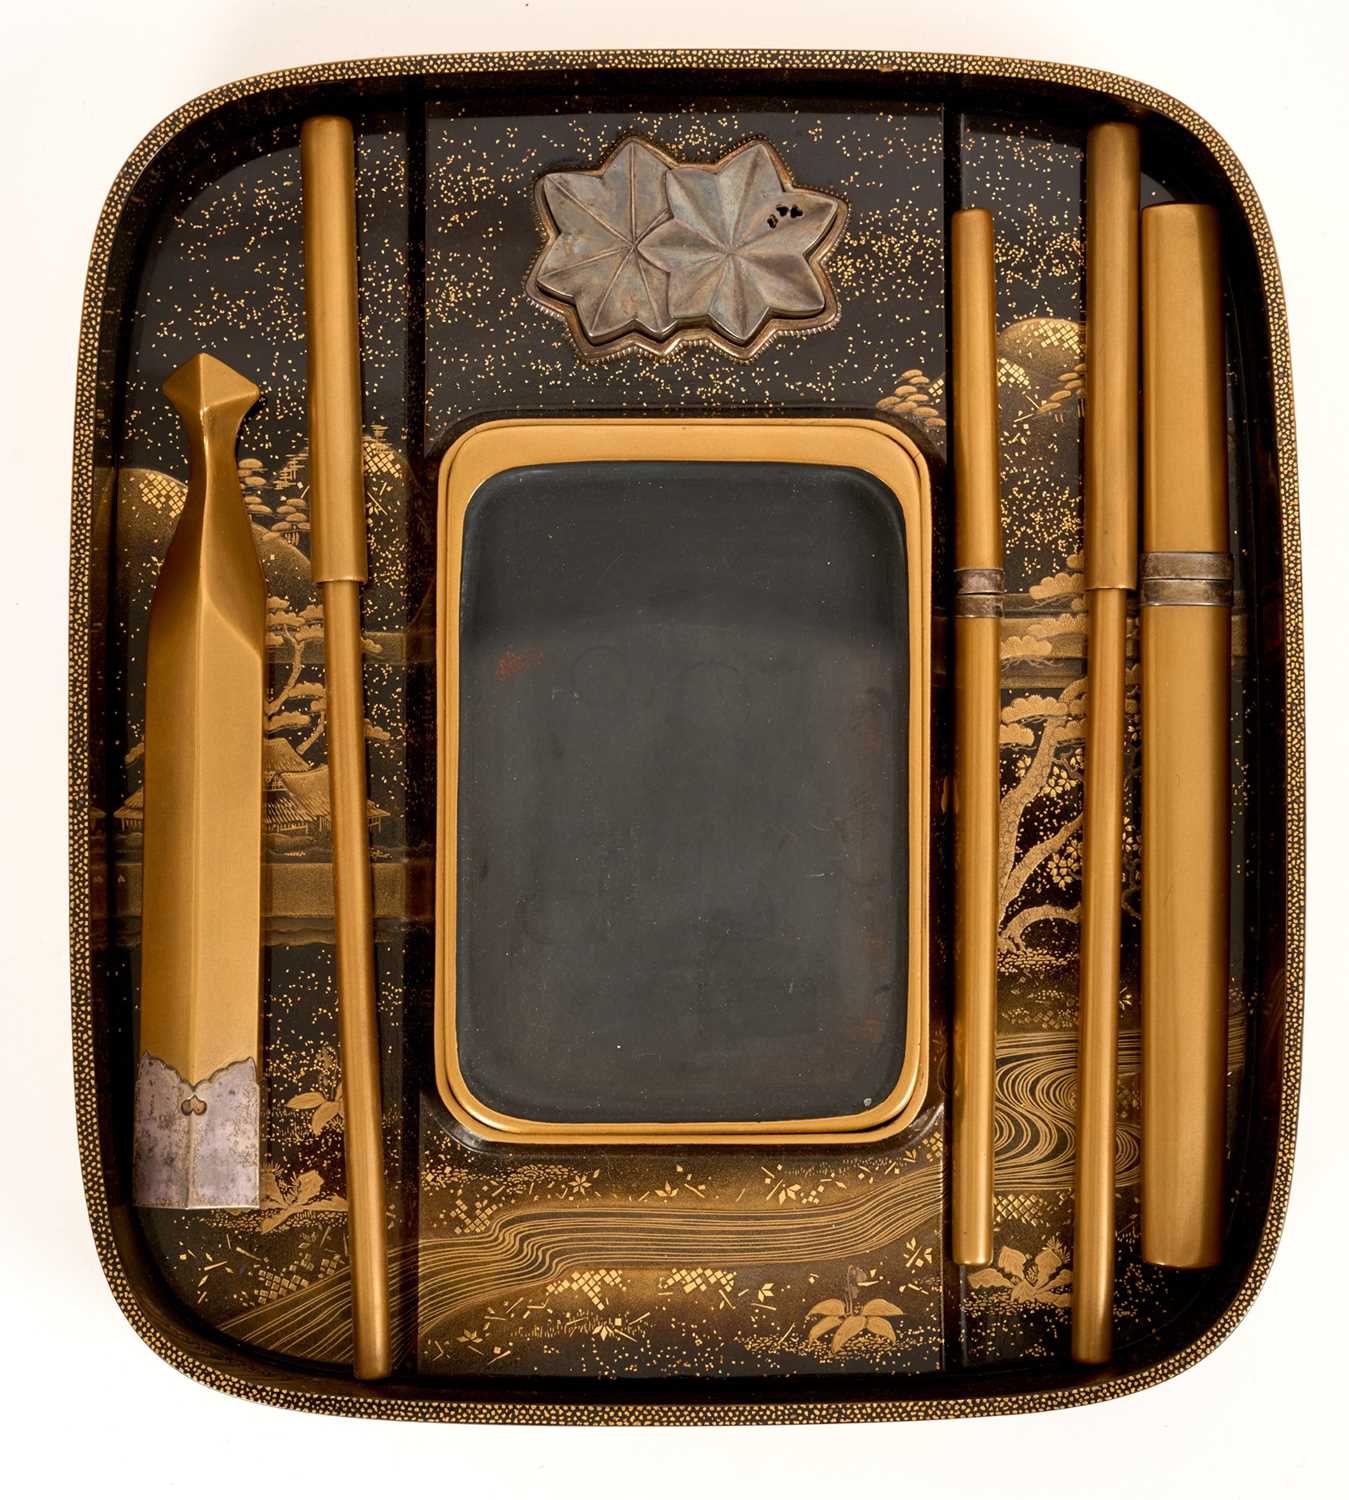 Superb matching set of a gold lacquer ryoshibako and suzuribako, Meiji Period - Image 12 of 18